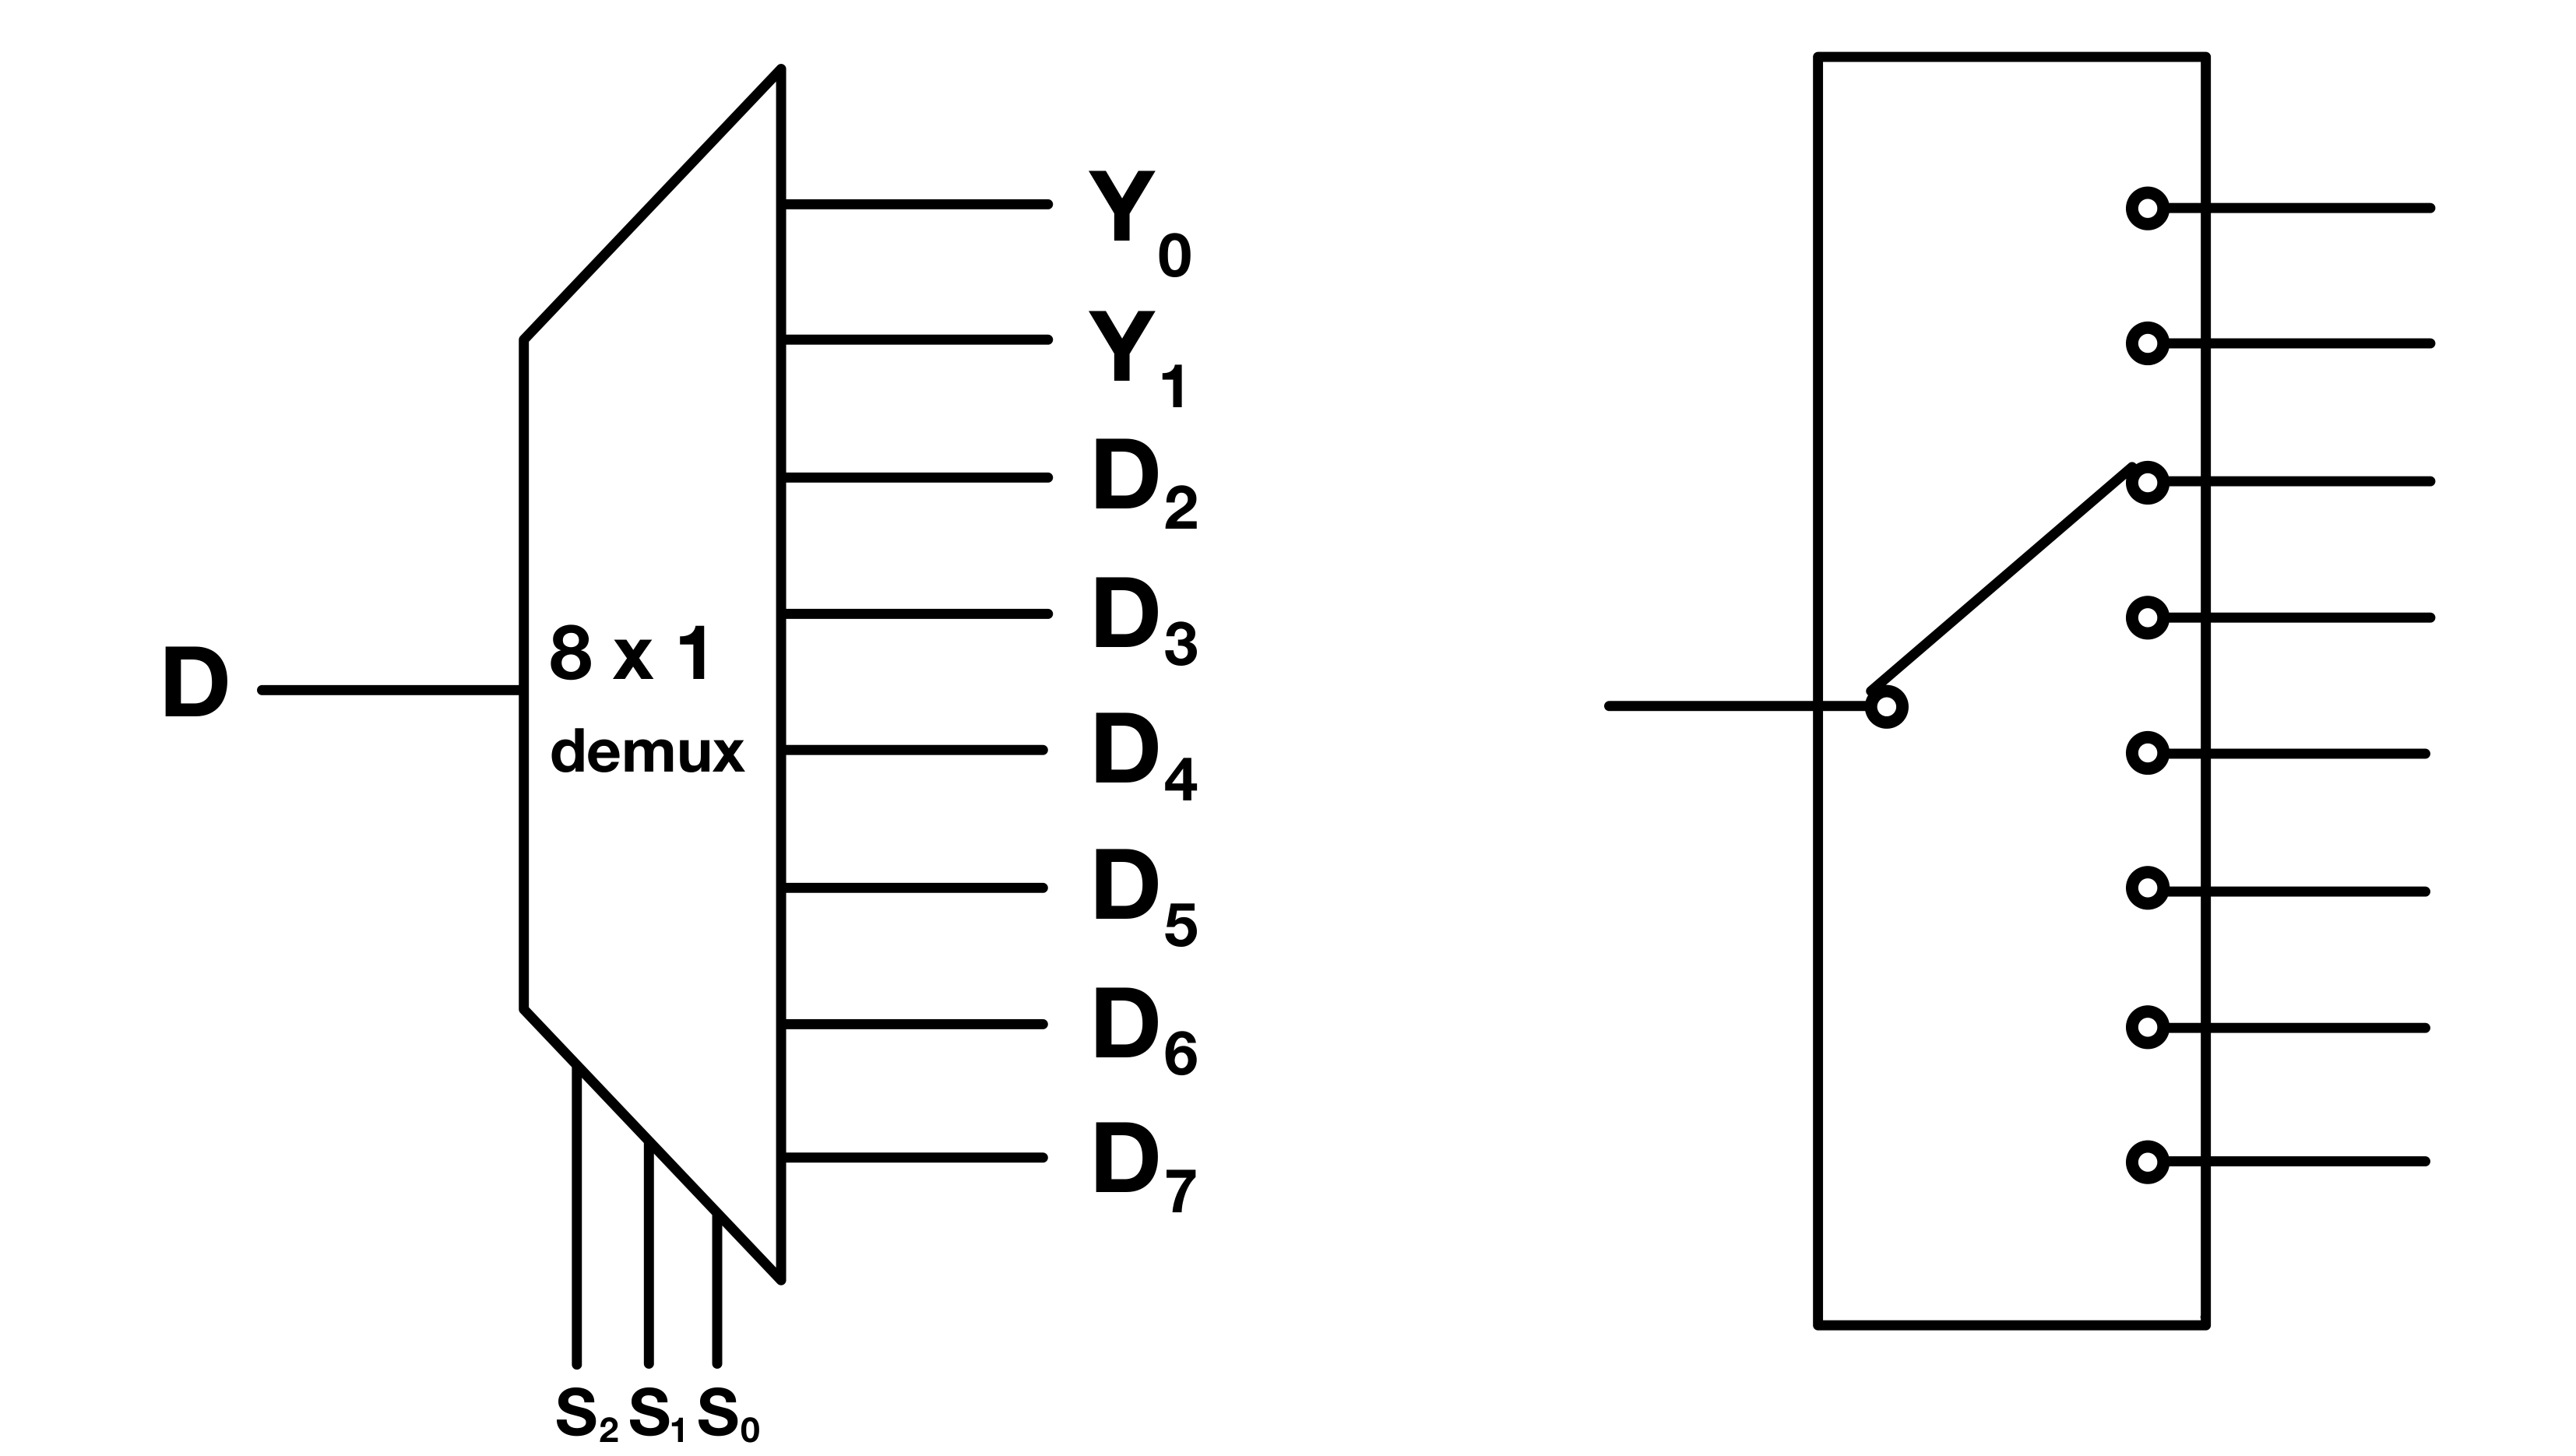 Figure 13: 1-to-8 decoder/demultiplexer